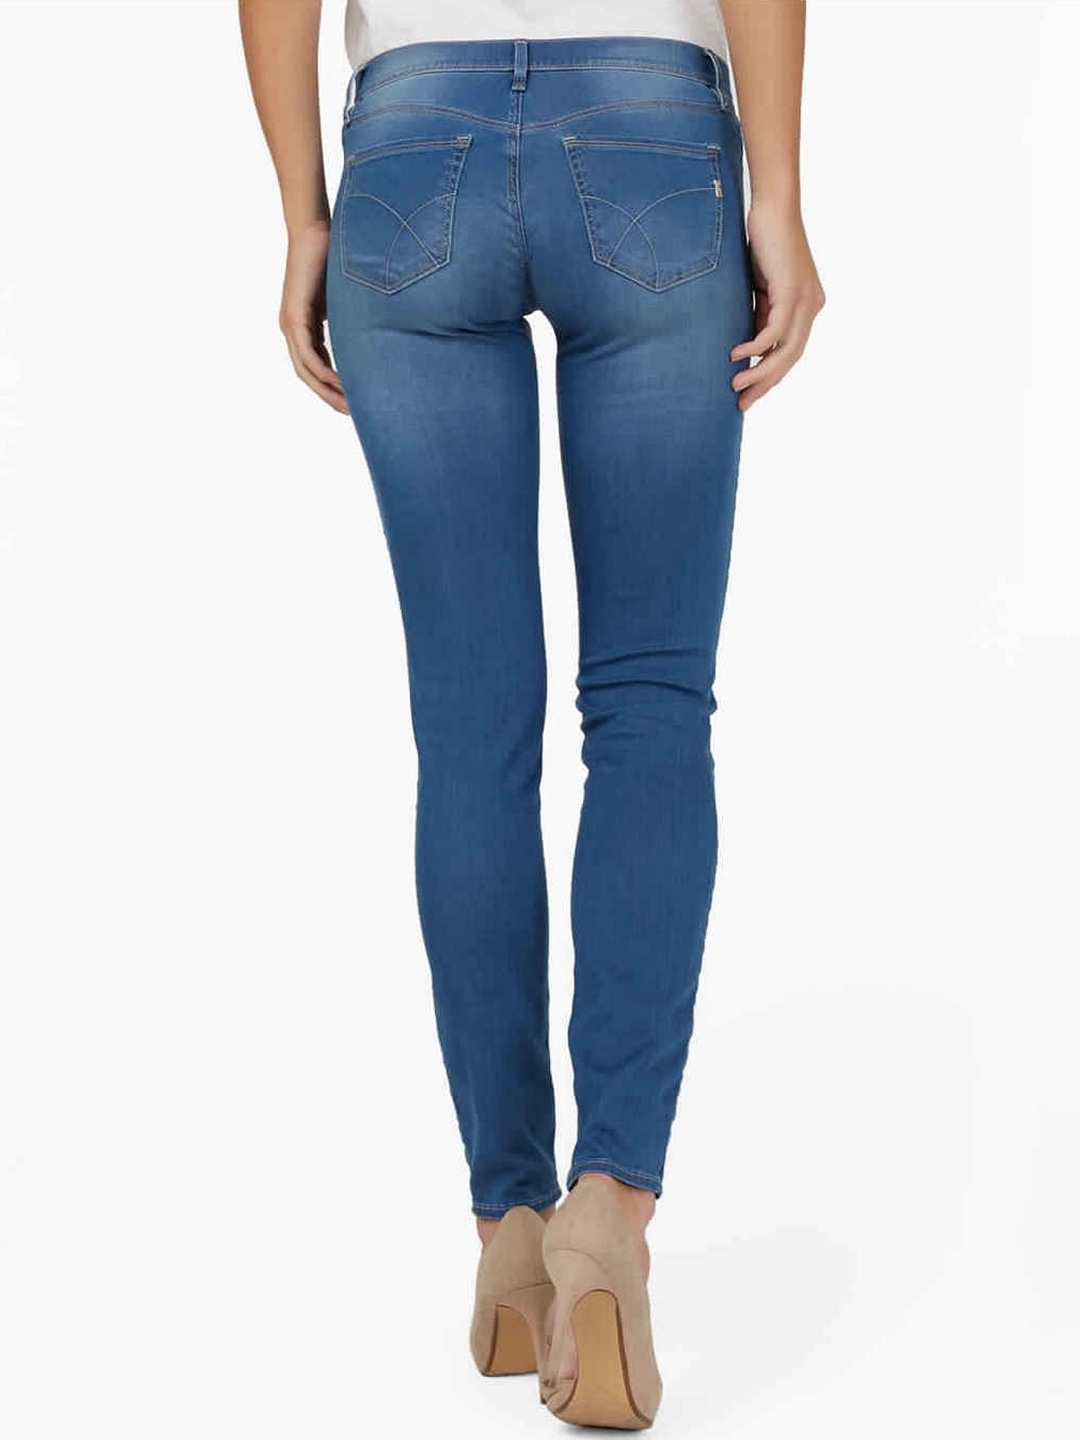 Women's Sumatra skinny fit mid wash jeans